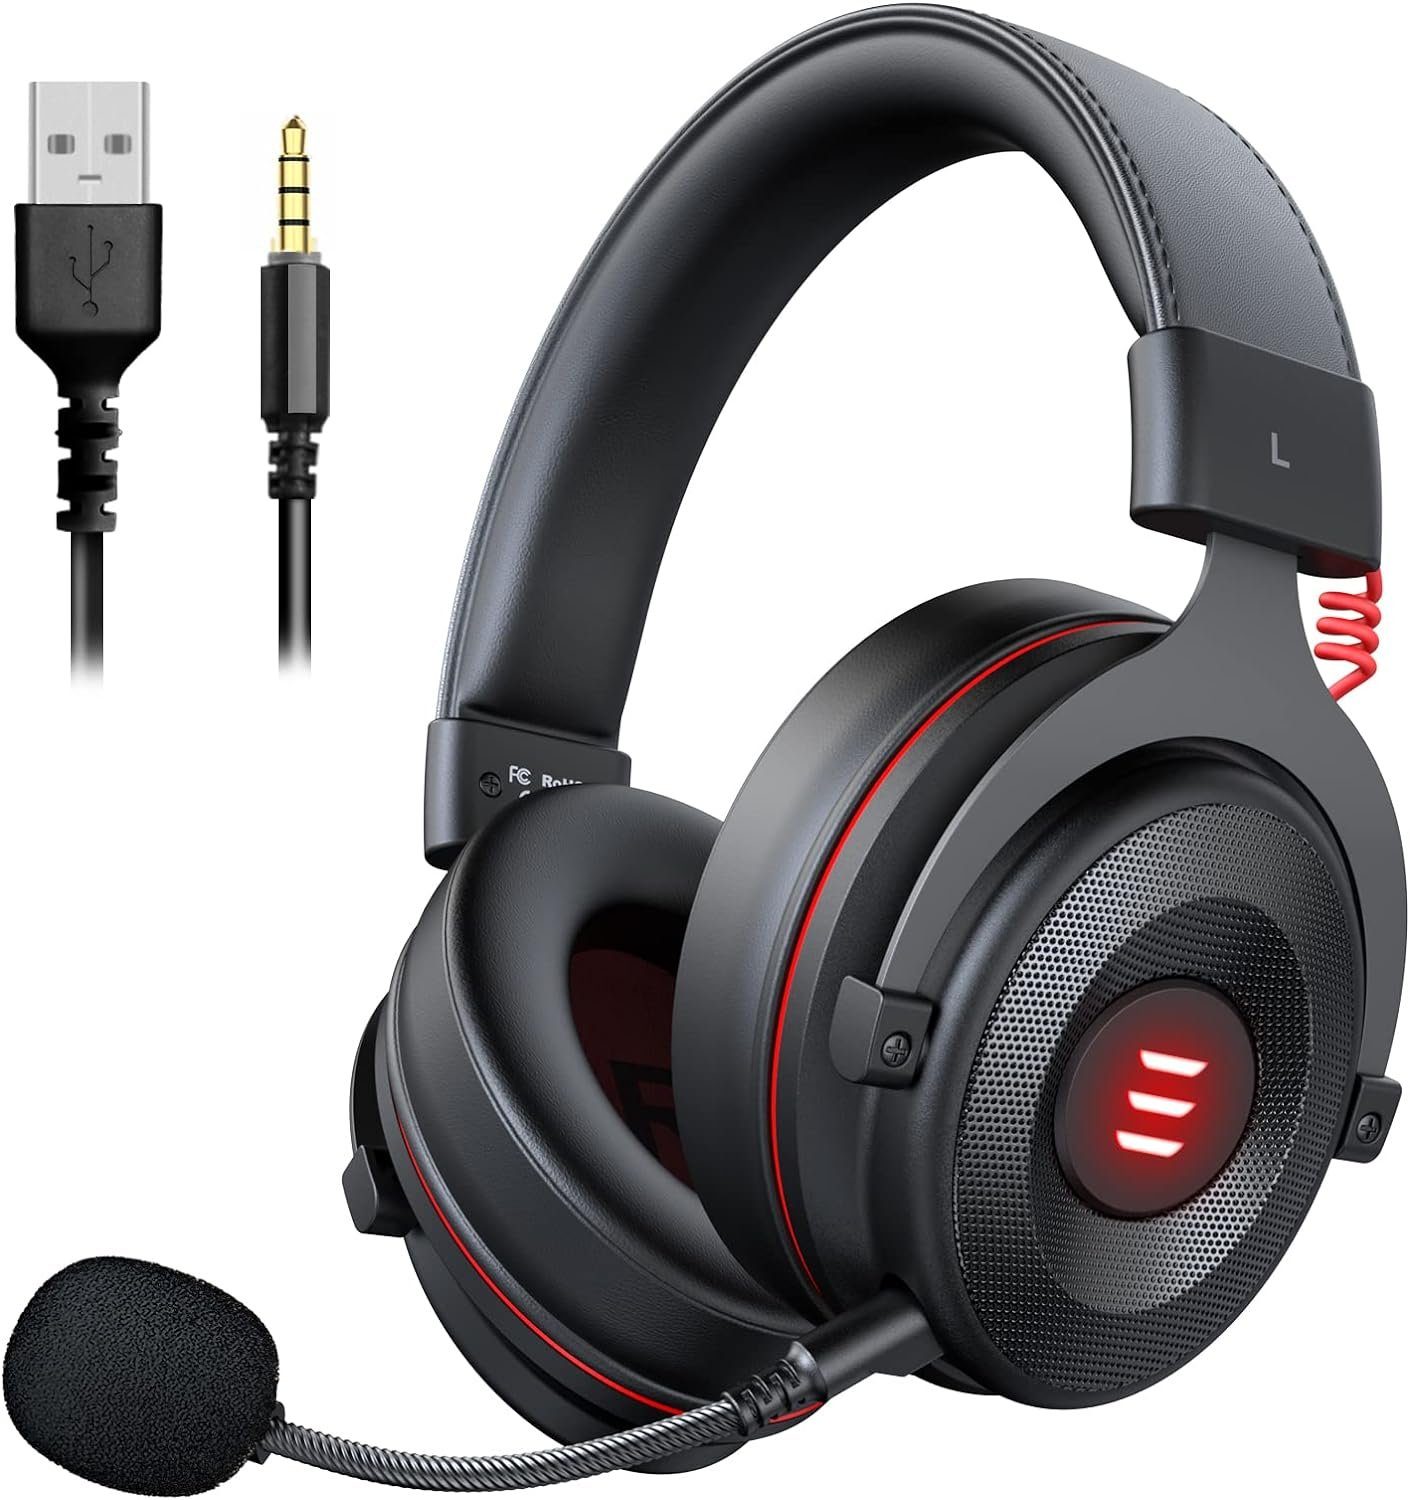 mikrofon Noise licht audiobuchse mit Headset superleichter Gaming-Headset kopfhörer) (Gaming Cancelling headset EKSA Mikrofon, Gaming USB-Headset,